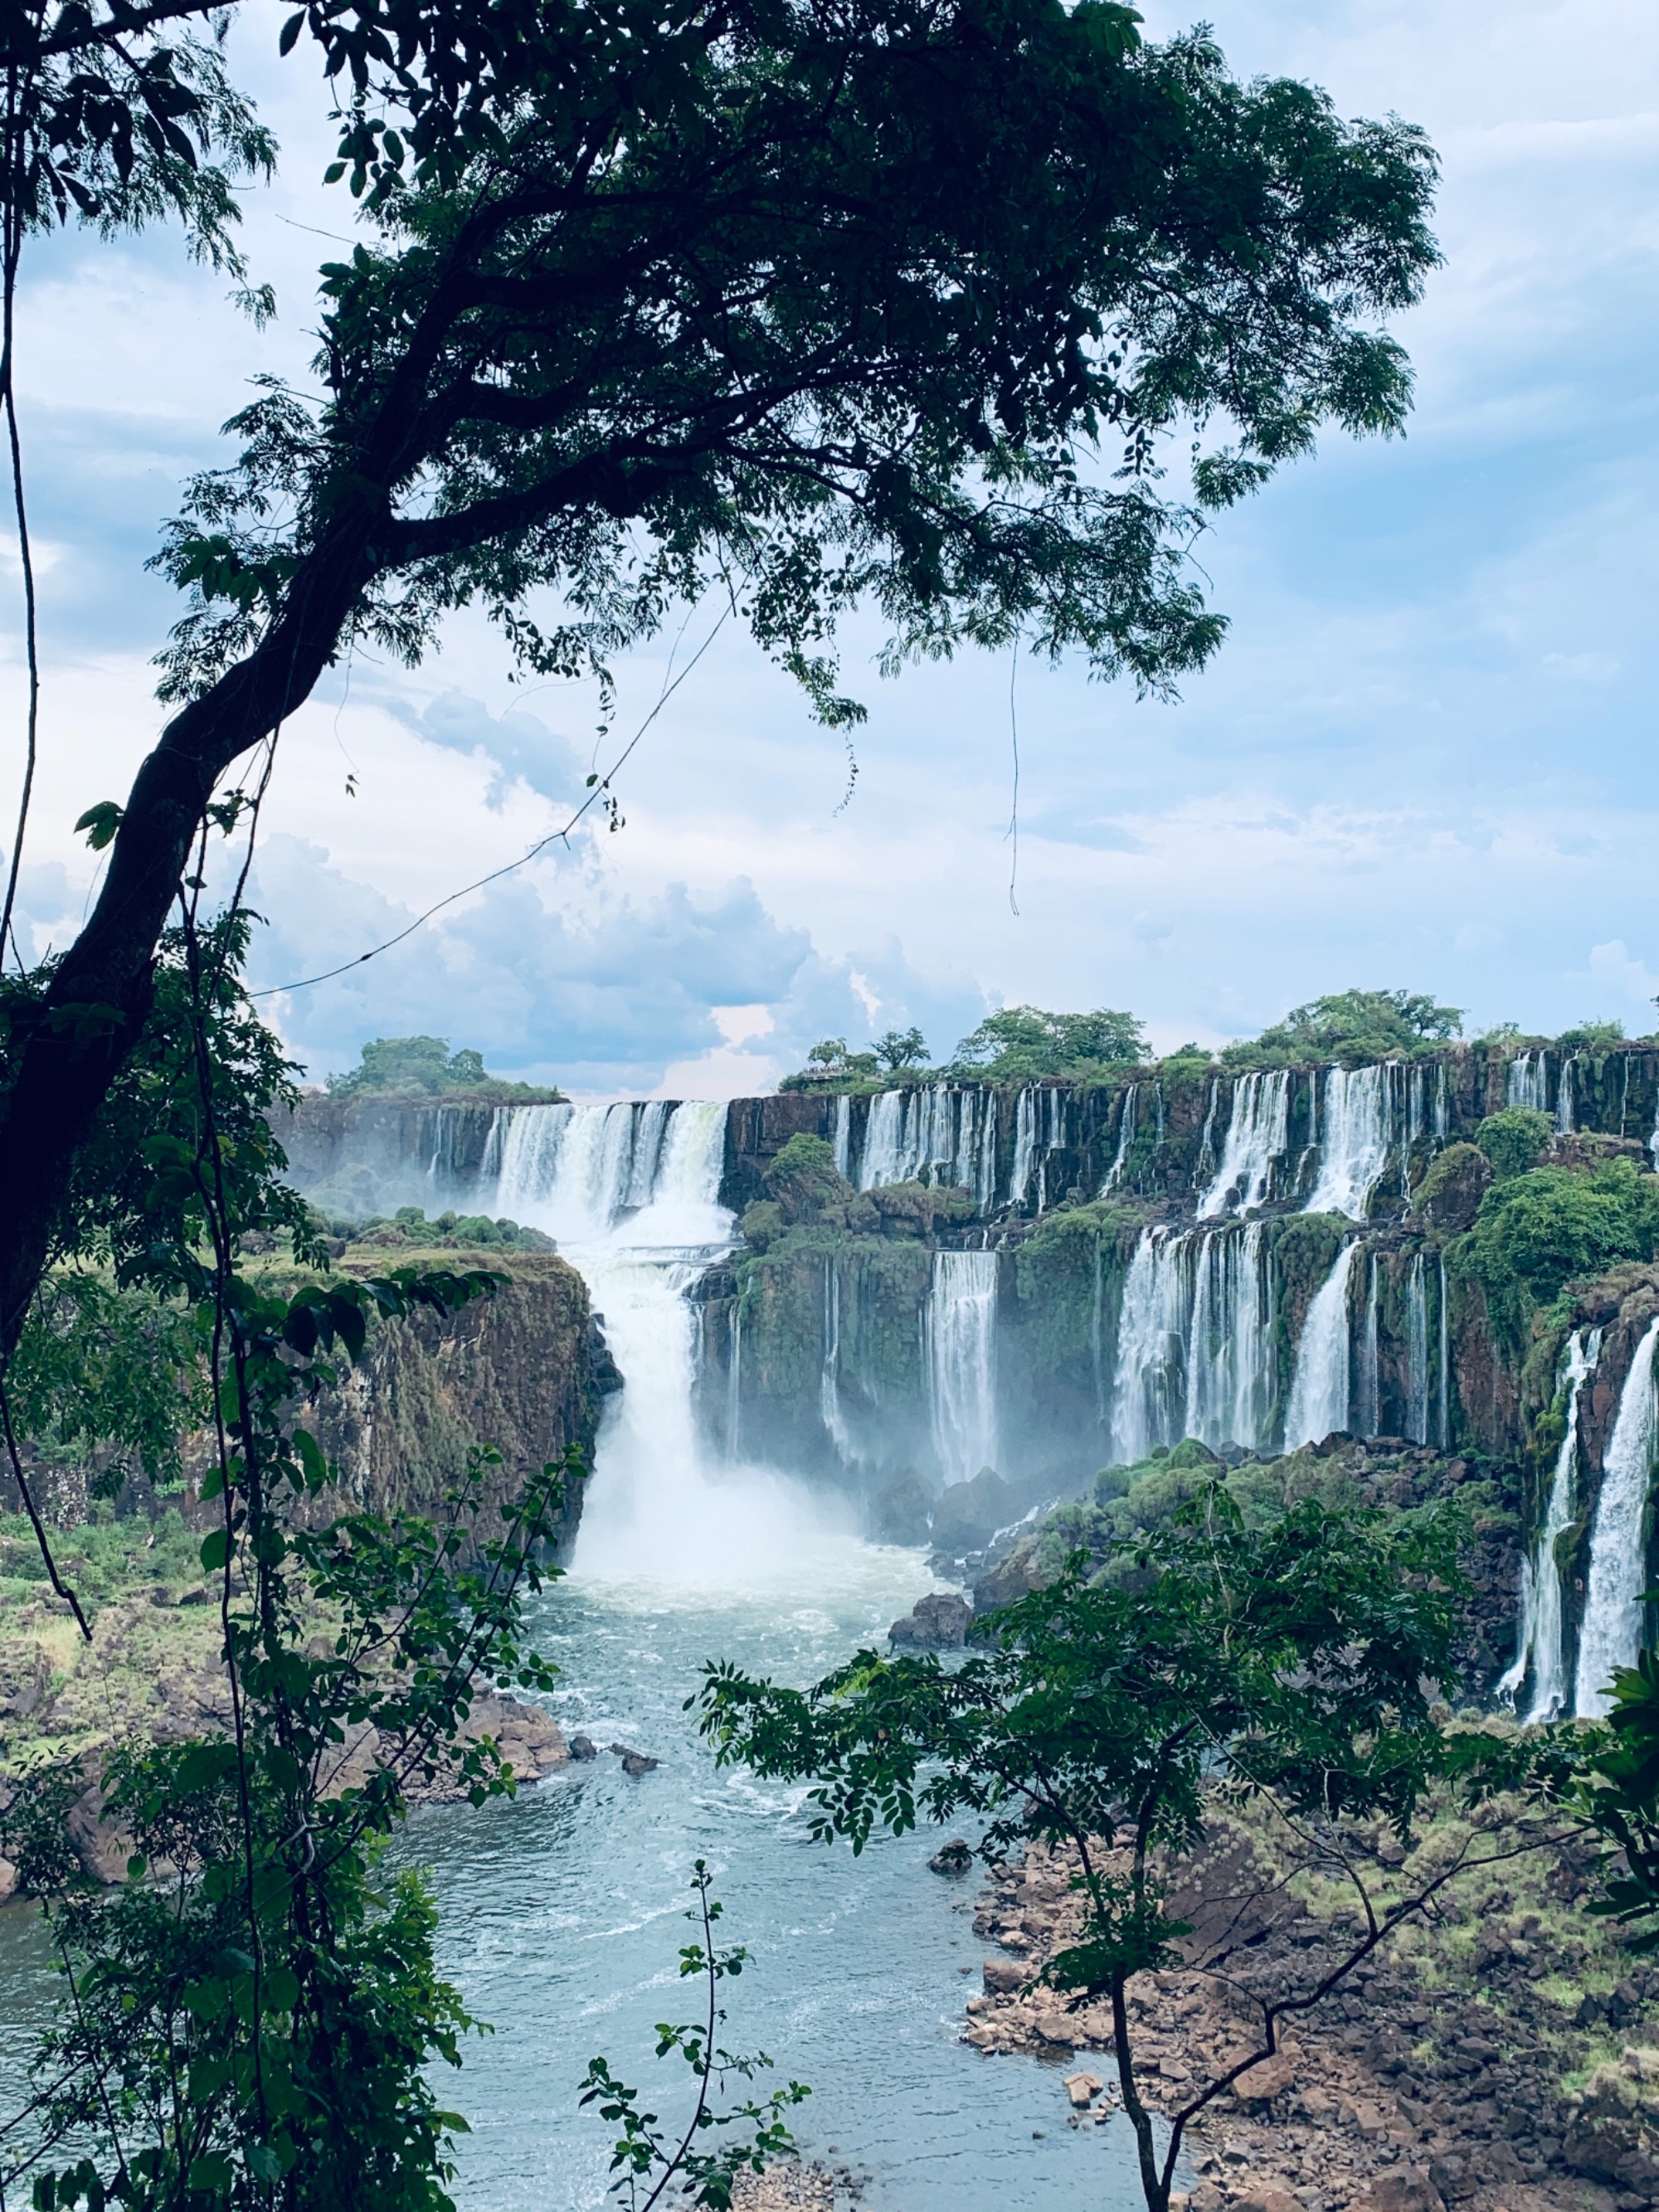 Iguazu falls-unparalleled, magnificent natural wonder